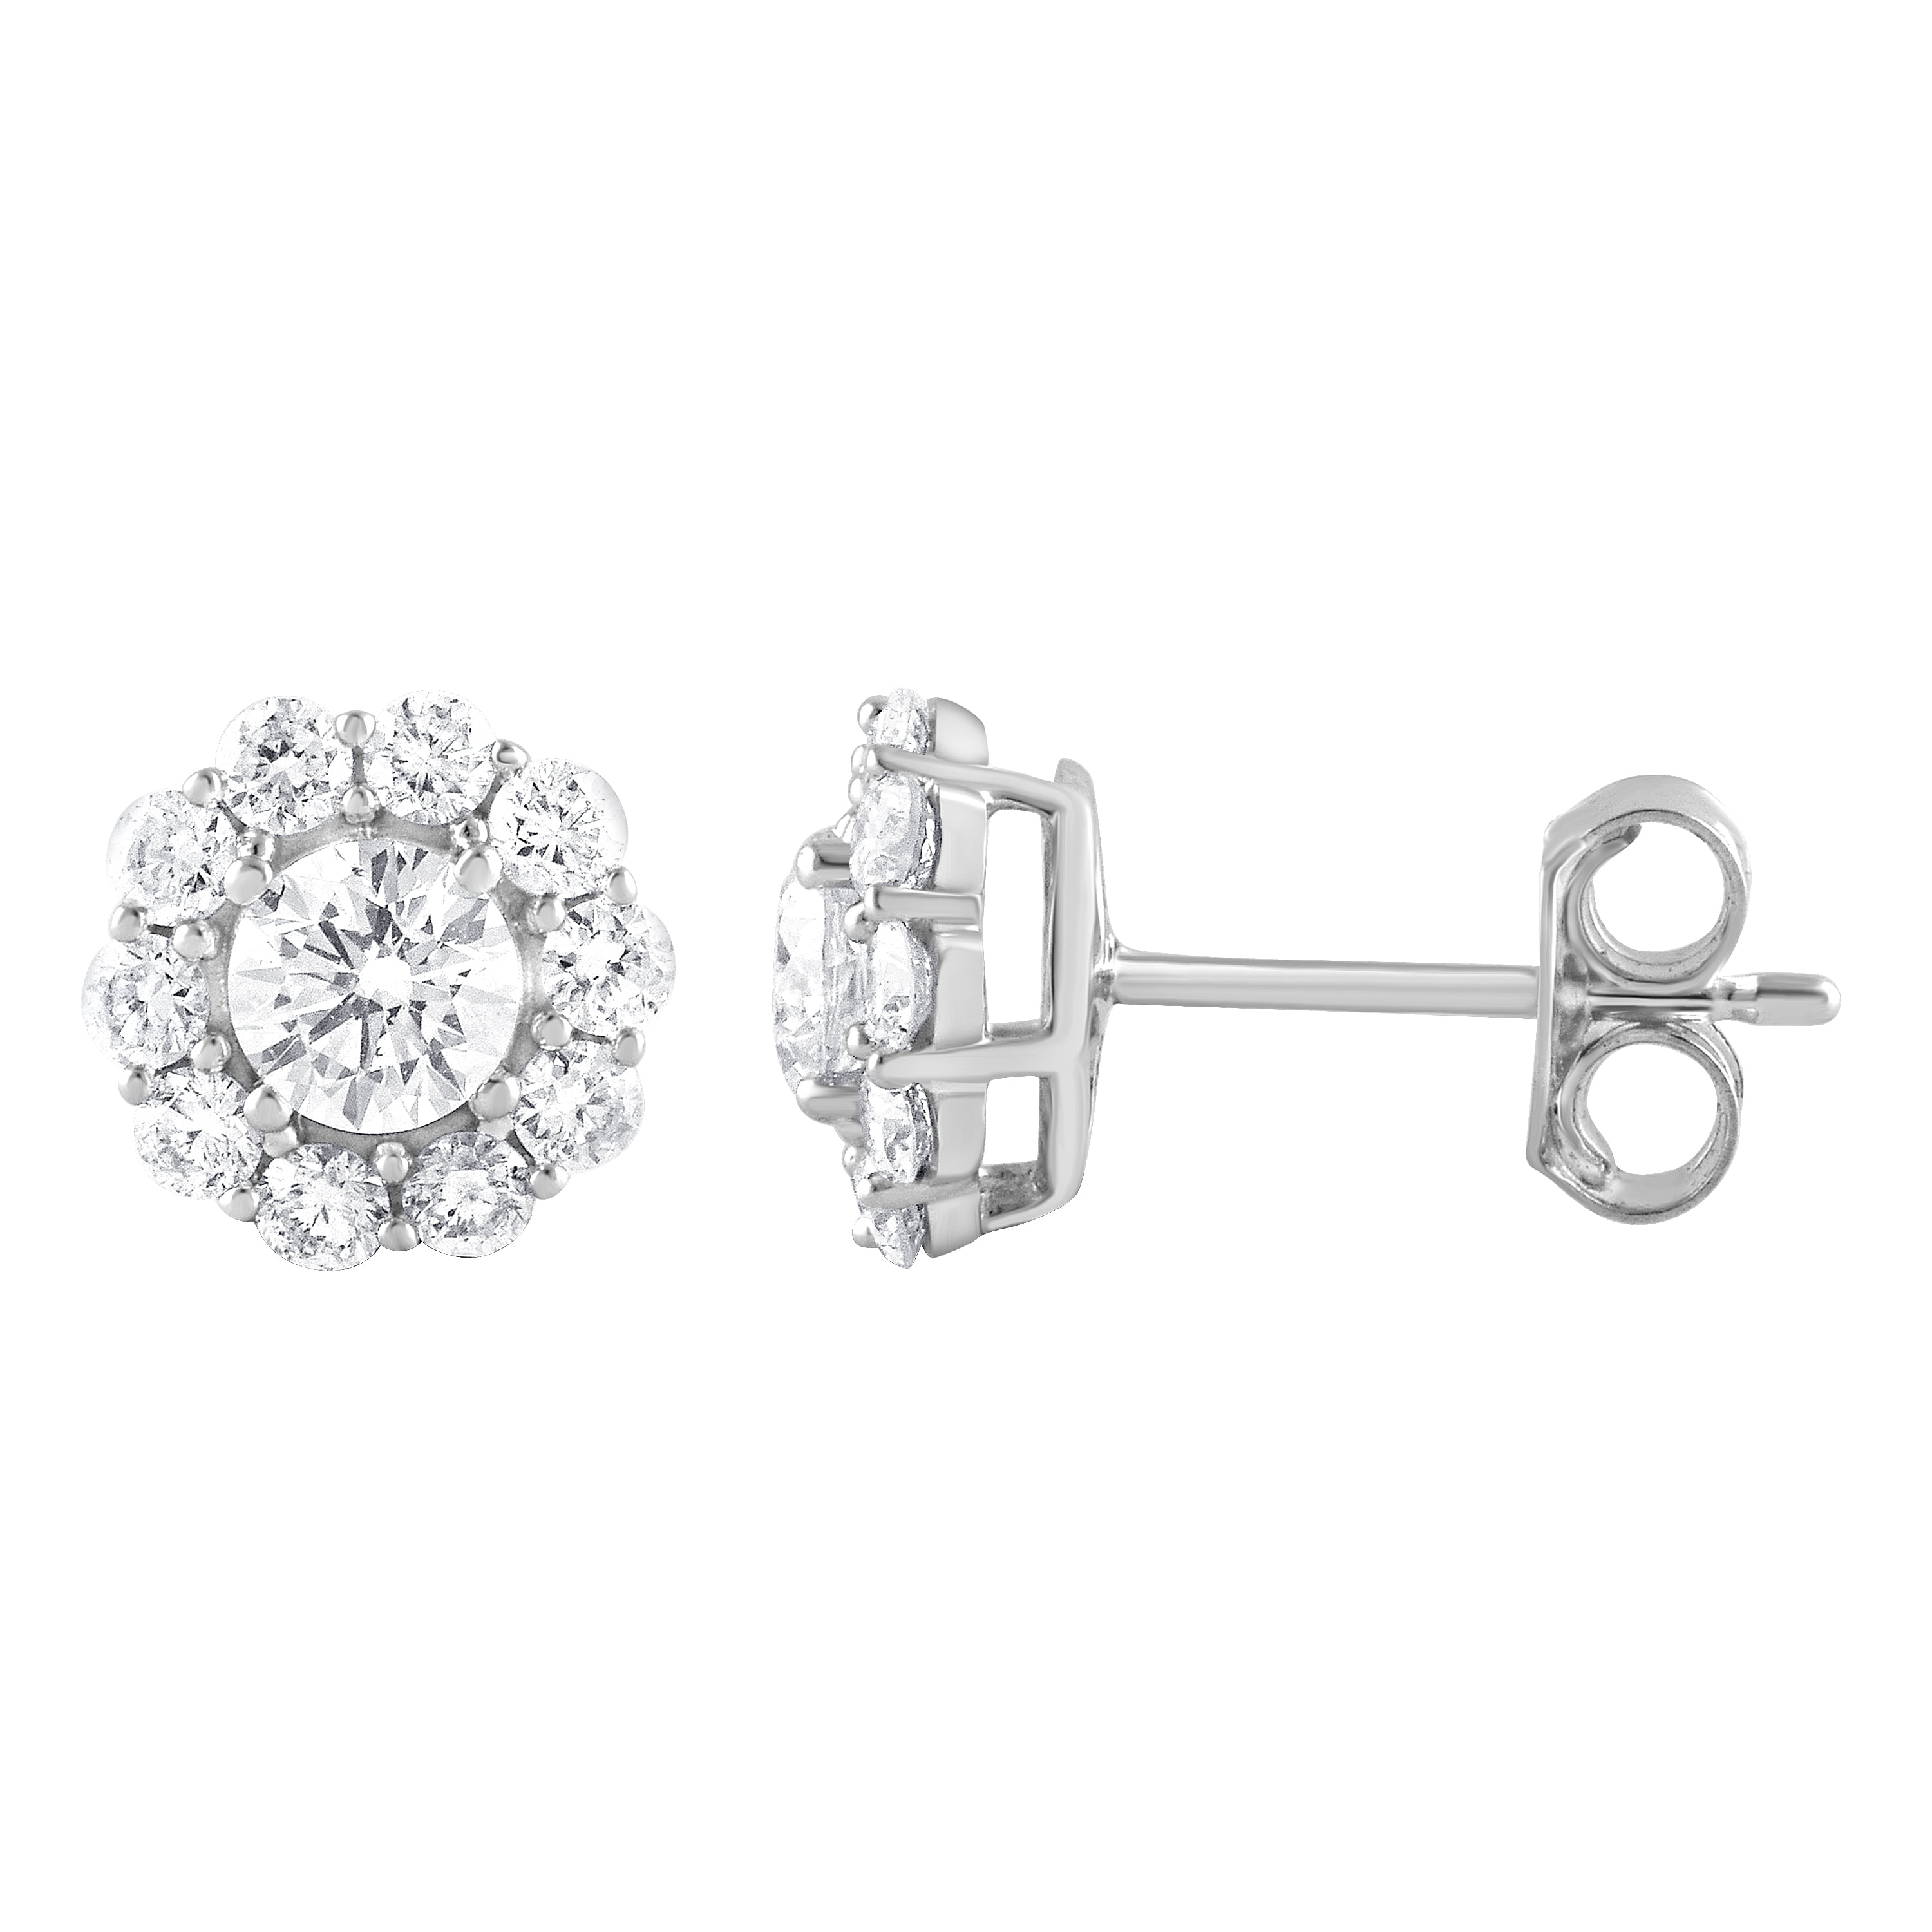 STERLING SILVER Stud Earrings Stunning 10mm Round created Diamonds Men's Women's 